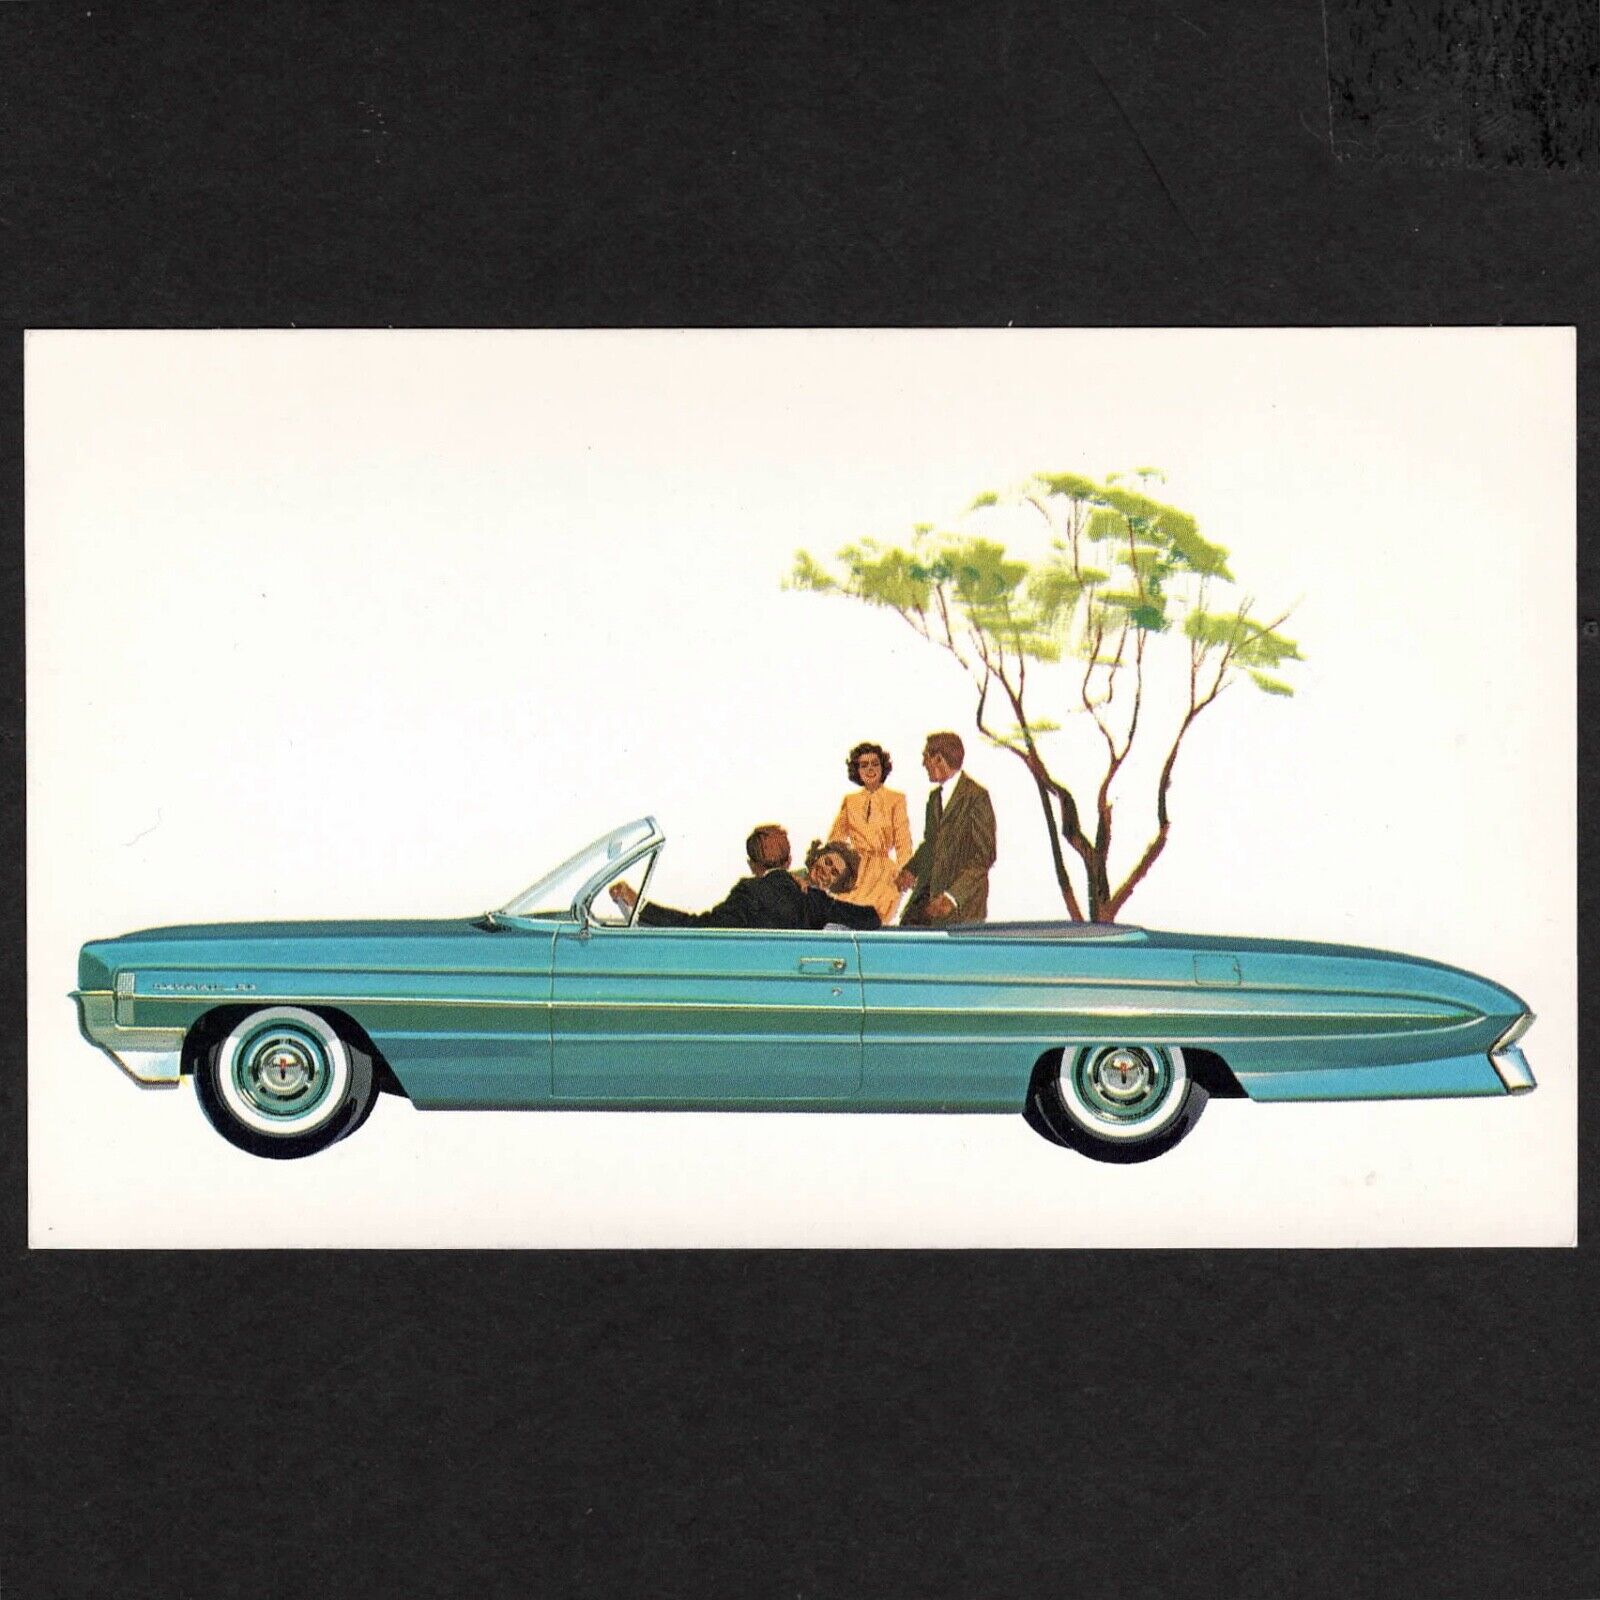 1961 Oldsmobile DYNAMIC 88 Convertible Coupe: Original Promo Postcard UNUSED VG+